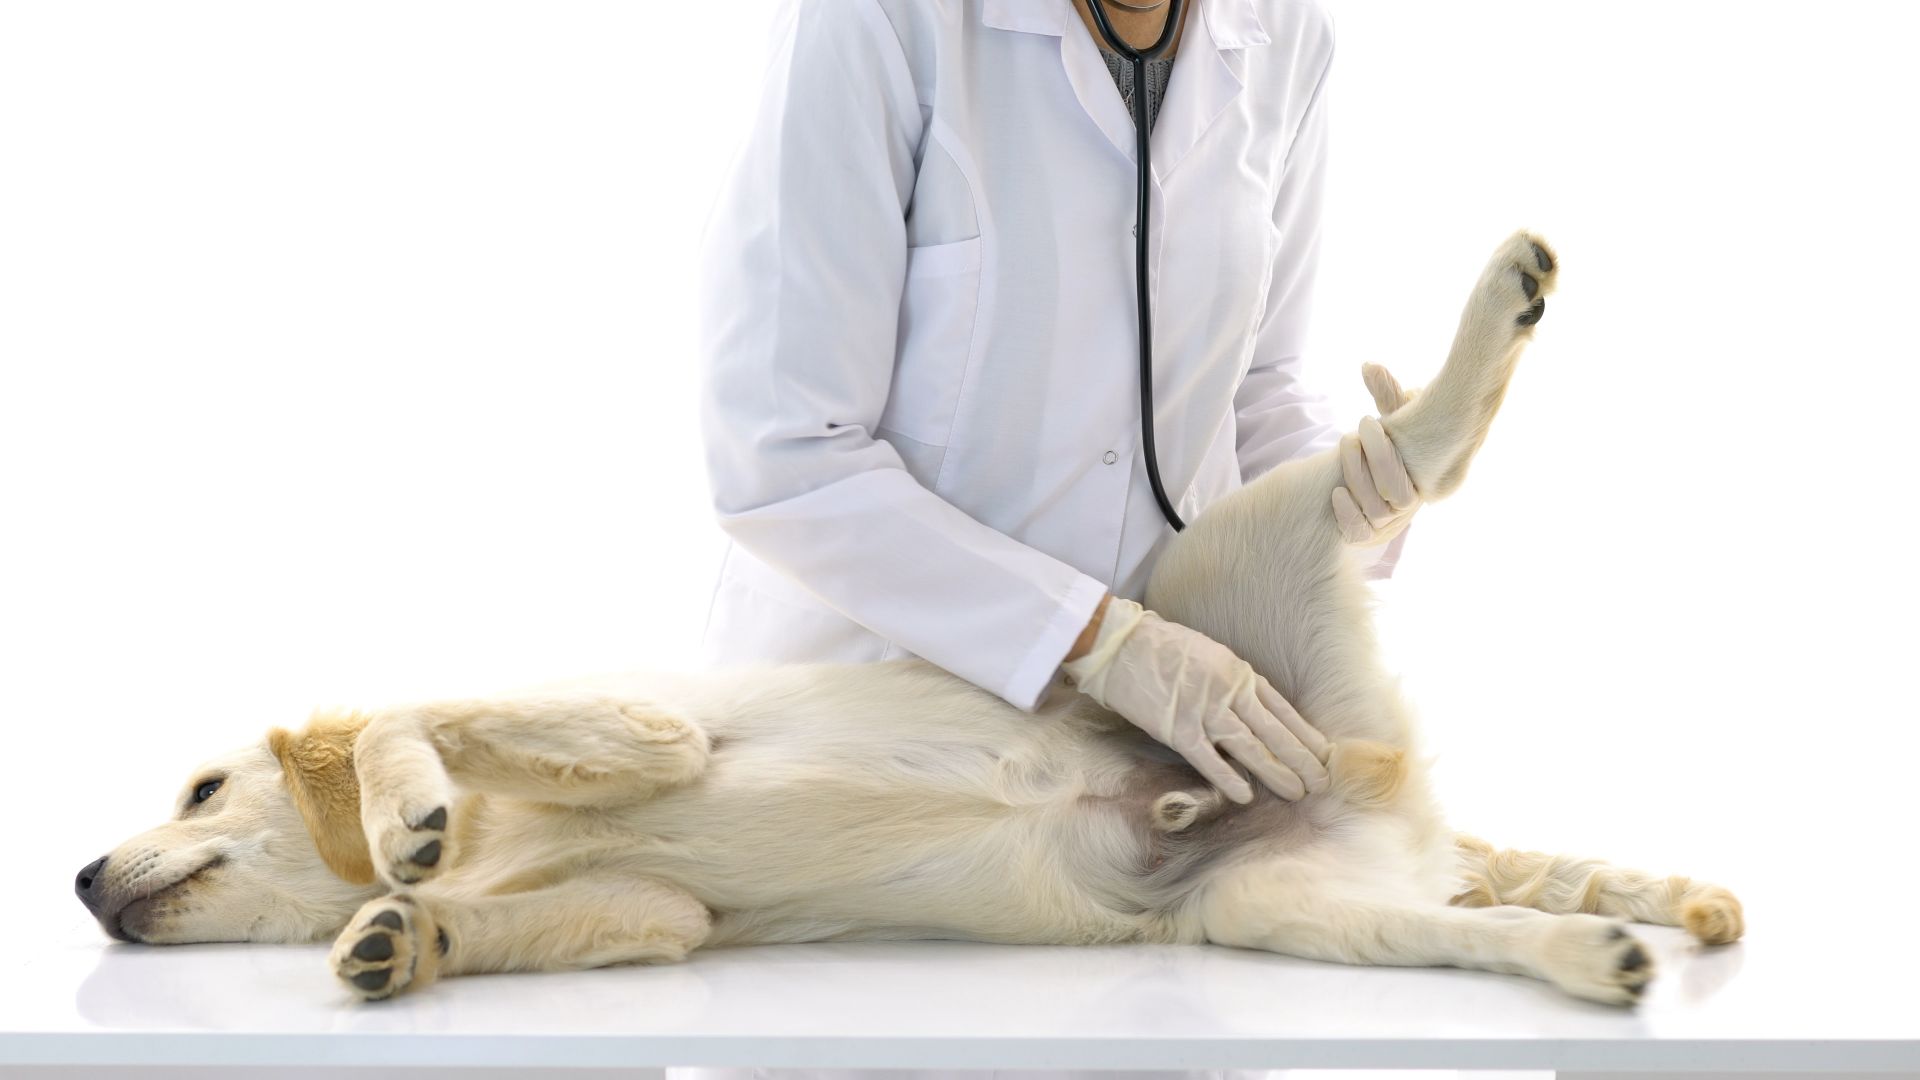 veterinarian examining a dog's urinary system.